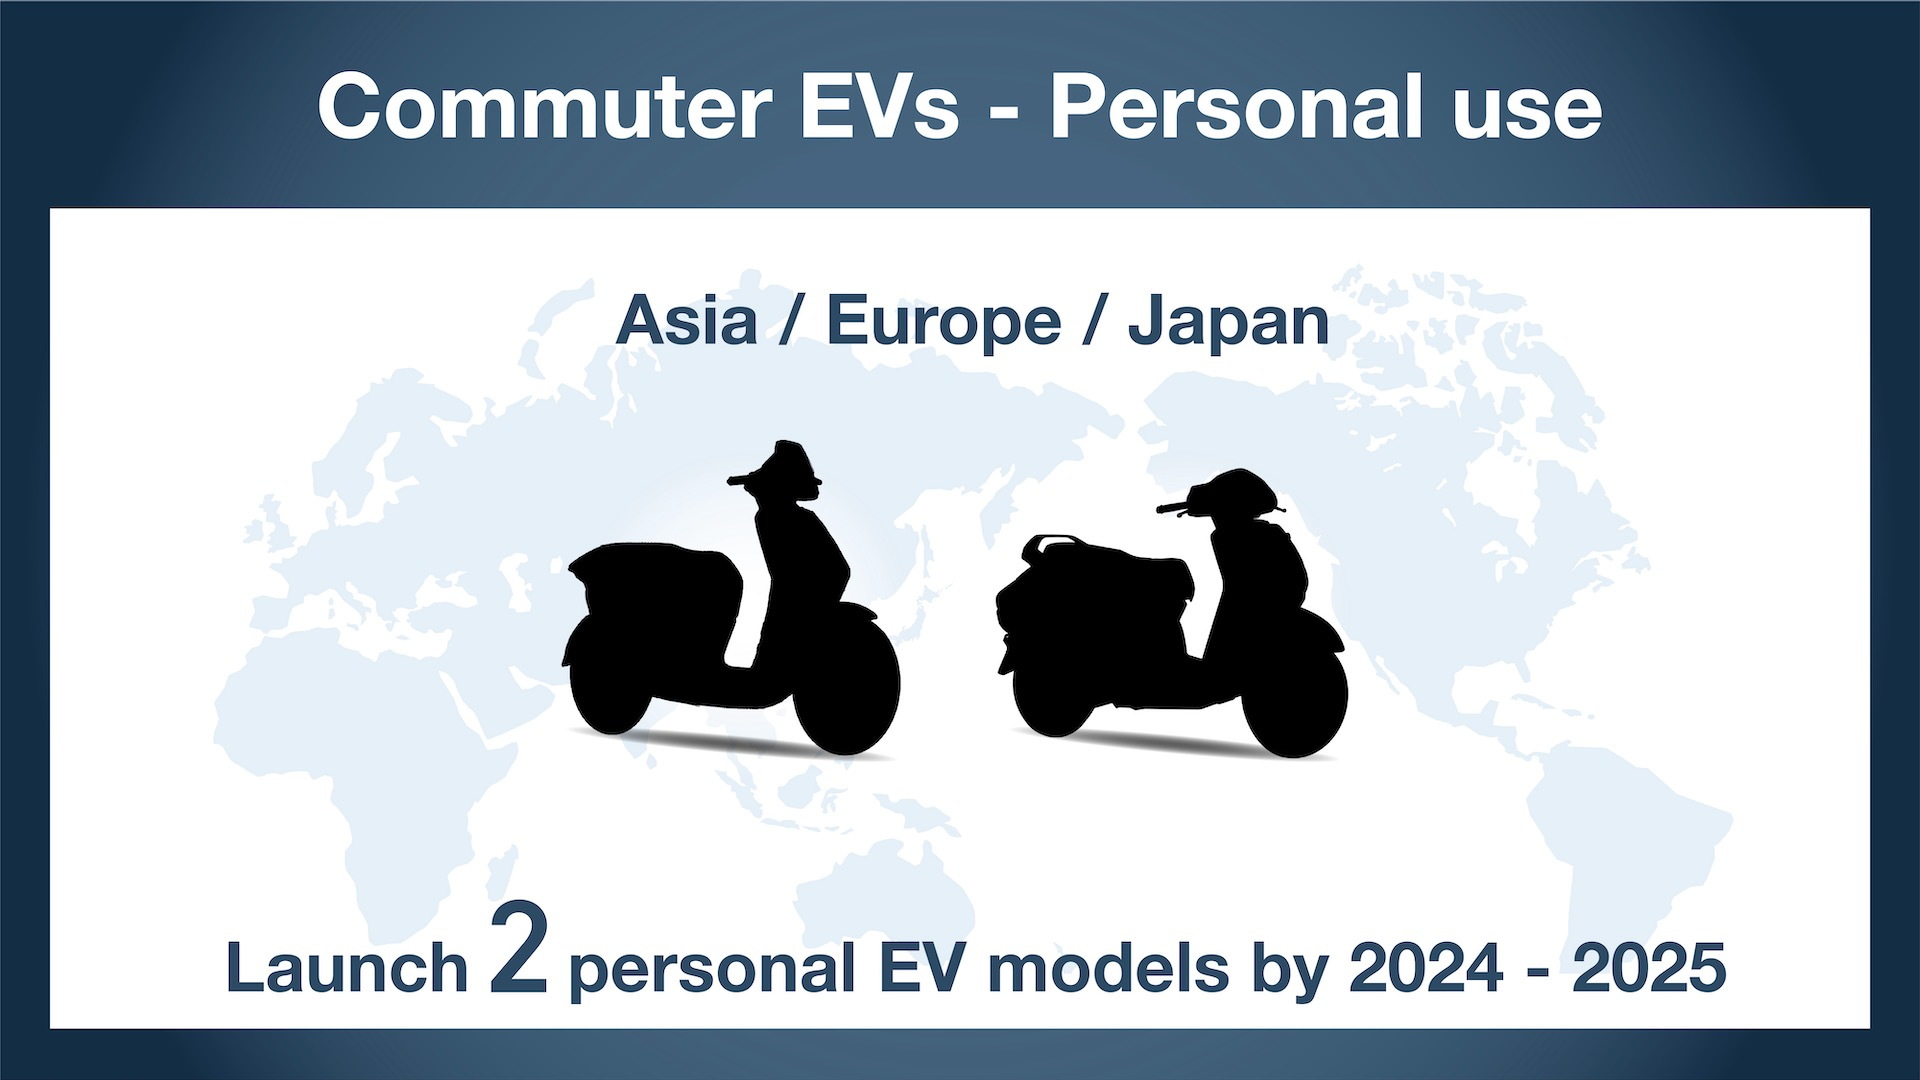 Honda electric motorcycle future plans